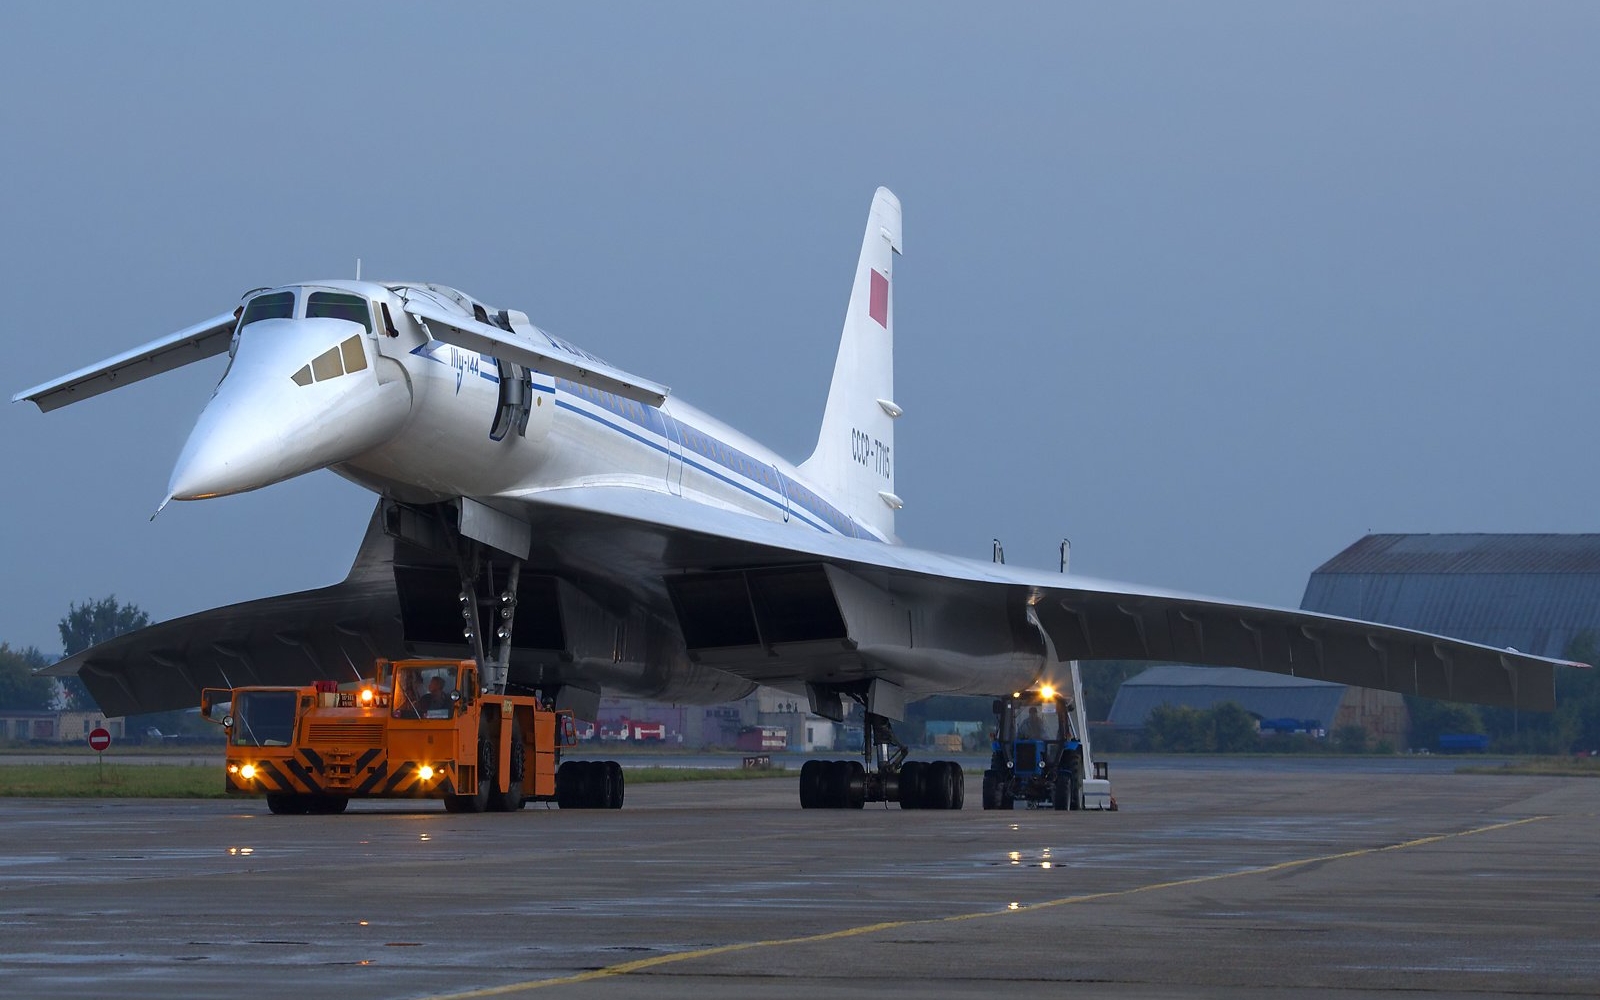 Baixar papel de parede para celular de Veículos, Tupolev Tu 144 gratuito.